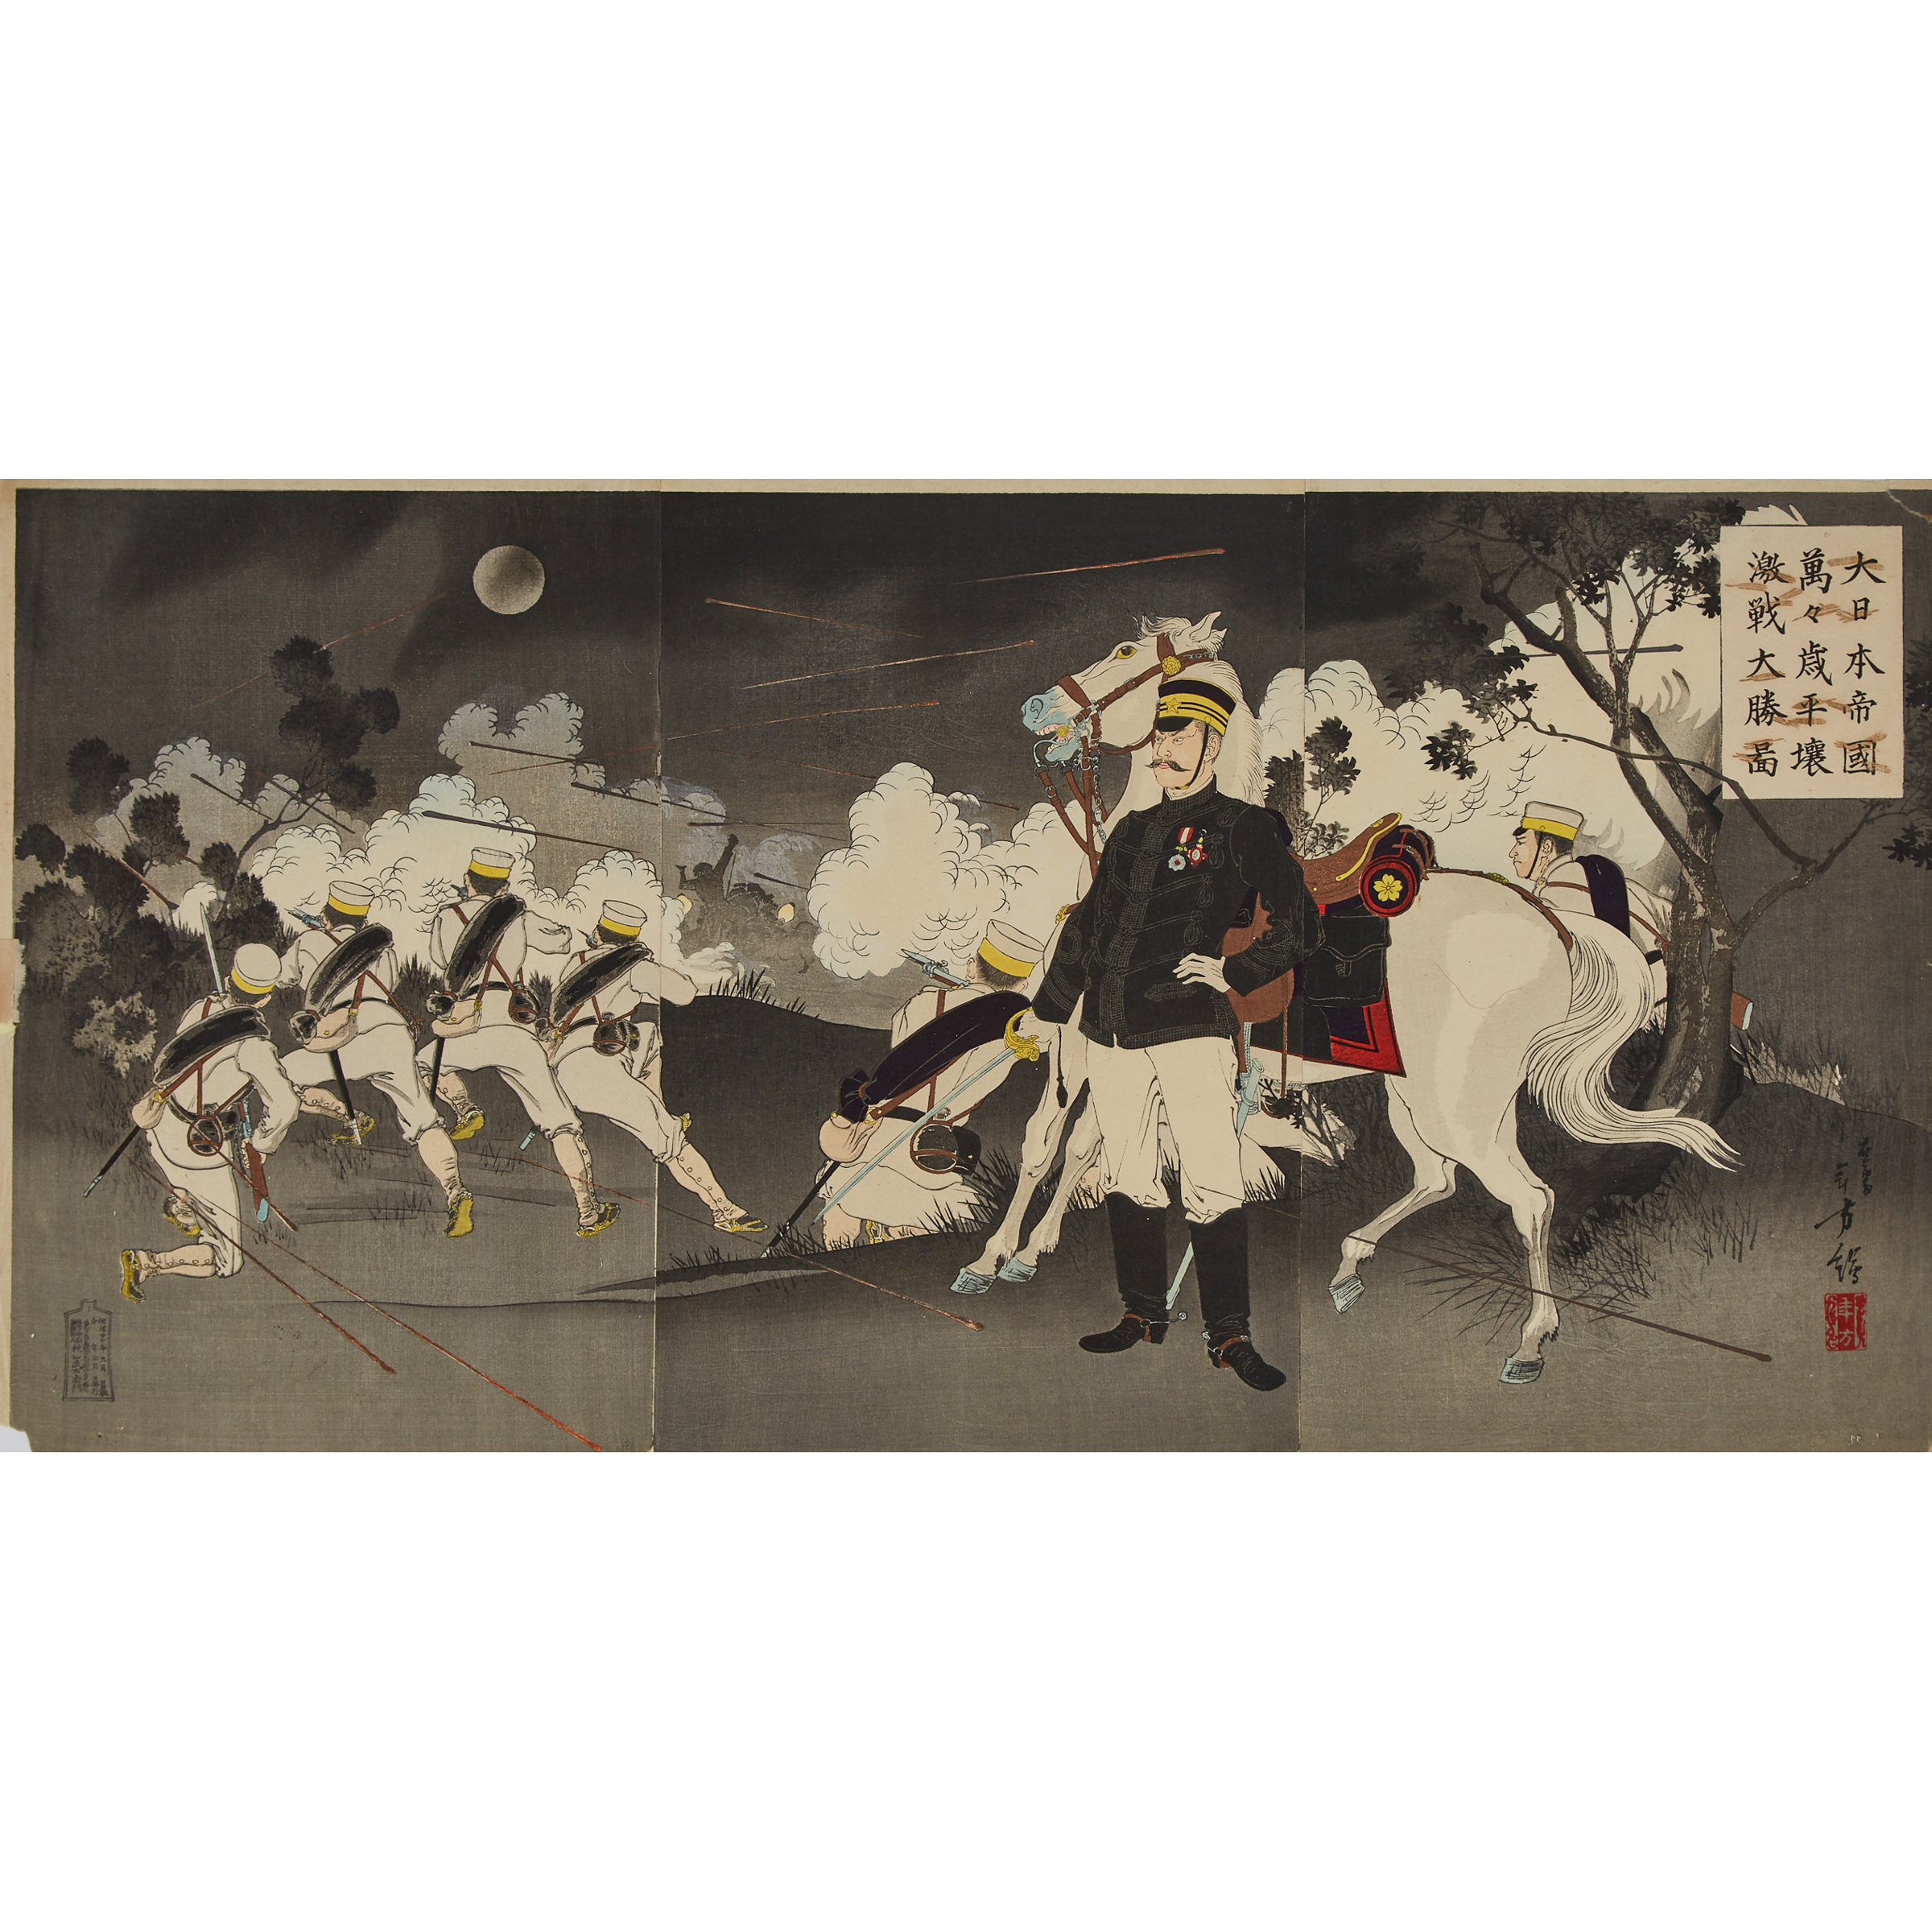 Mizuno Toshikata (1886-1908), Ban Banzai for Great Imperial Japan: a Great Victory at Pyongyang after a Hard Fight, 1894